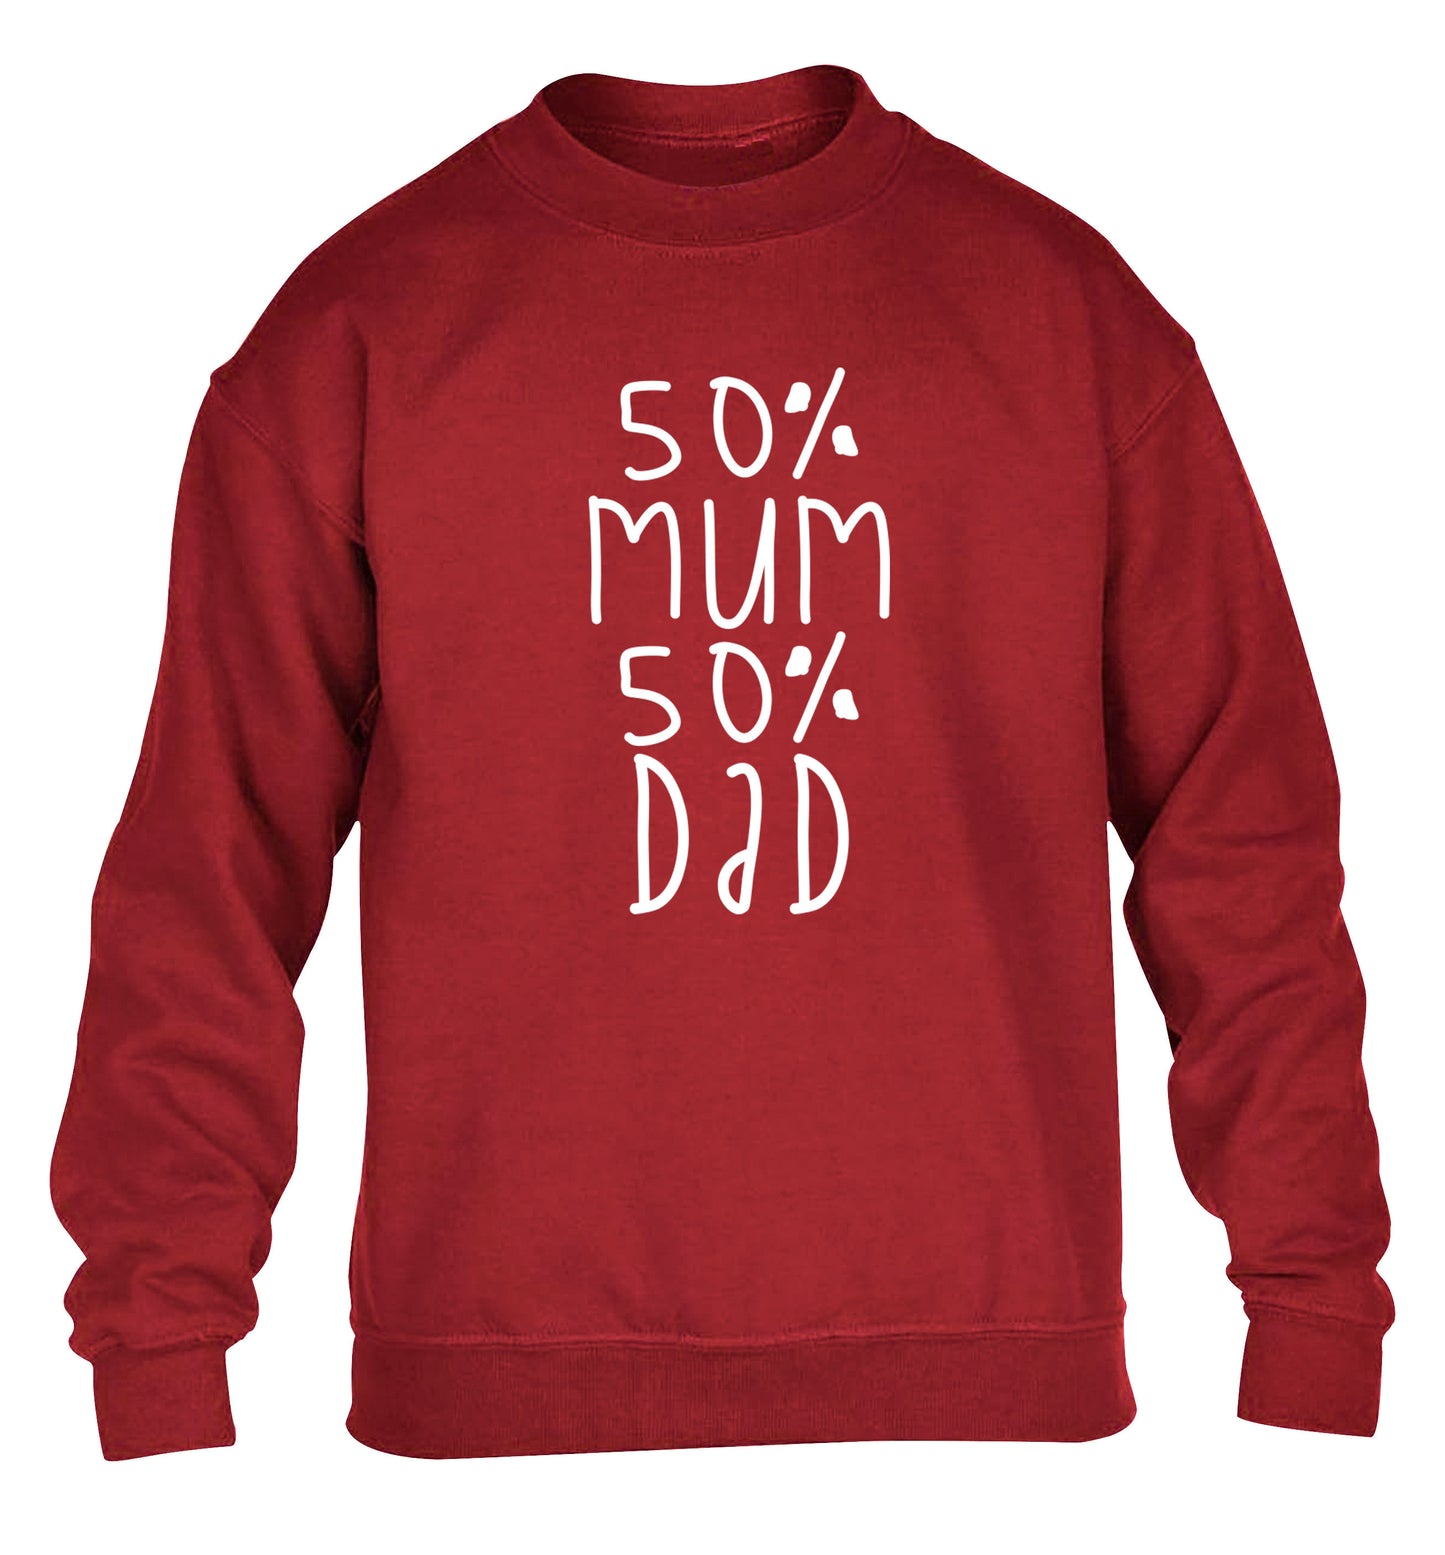 50% mum 50% dad children's grey sweater 12-14 Years